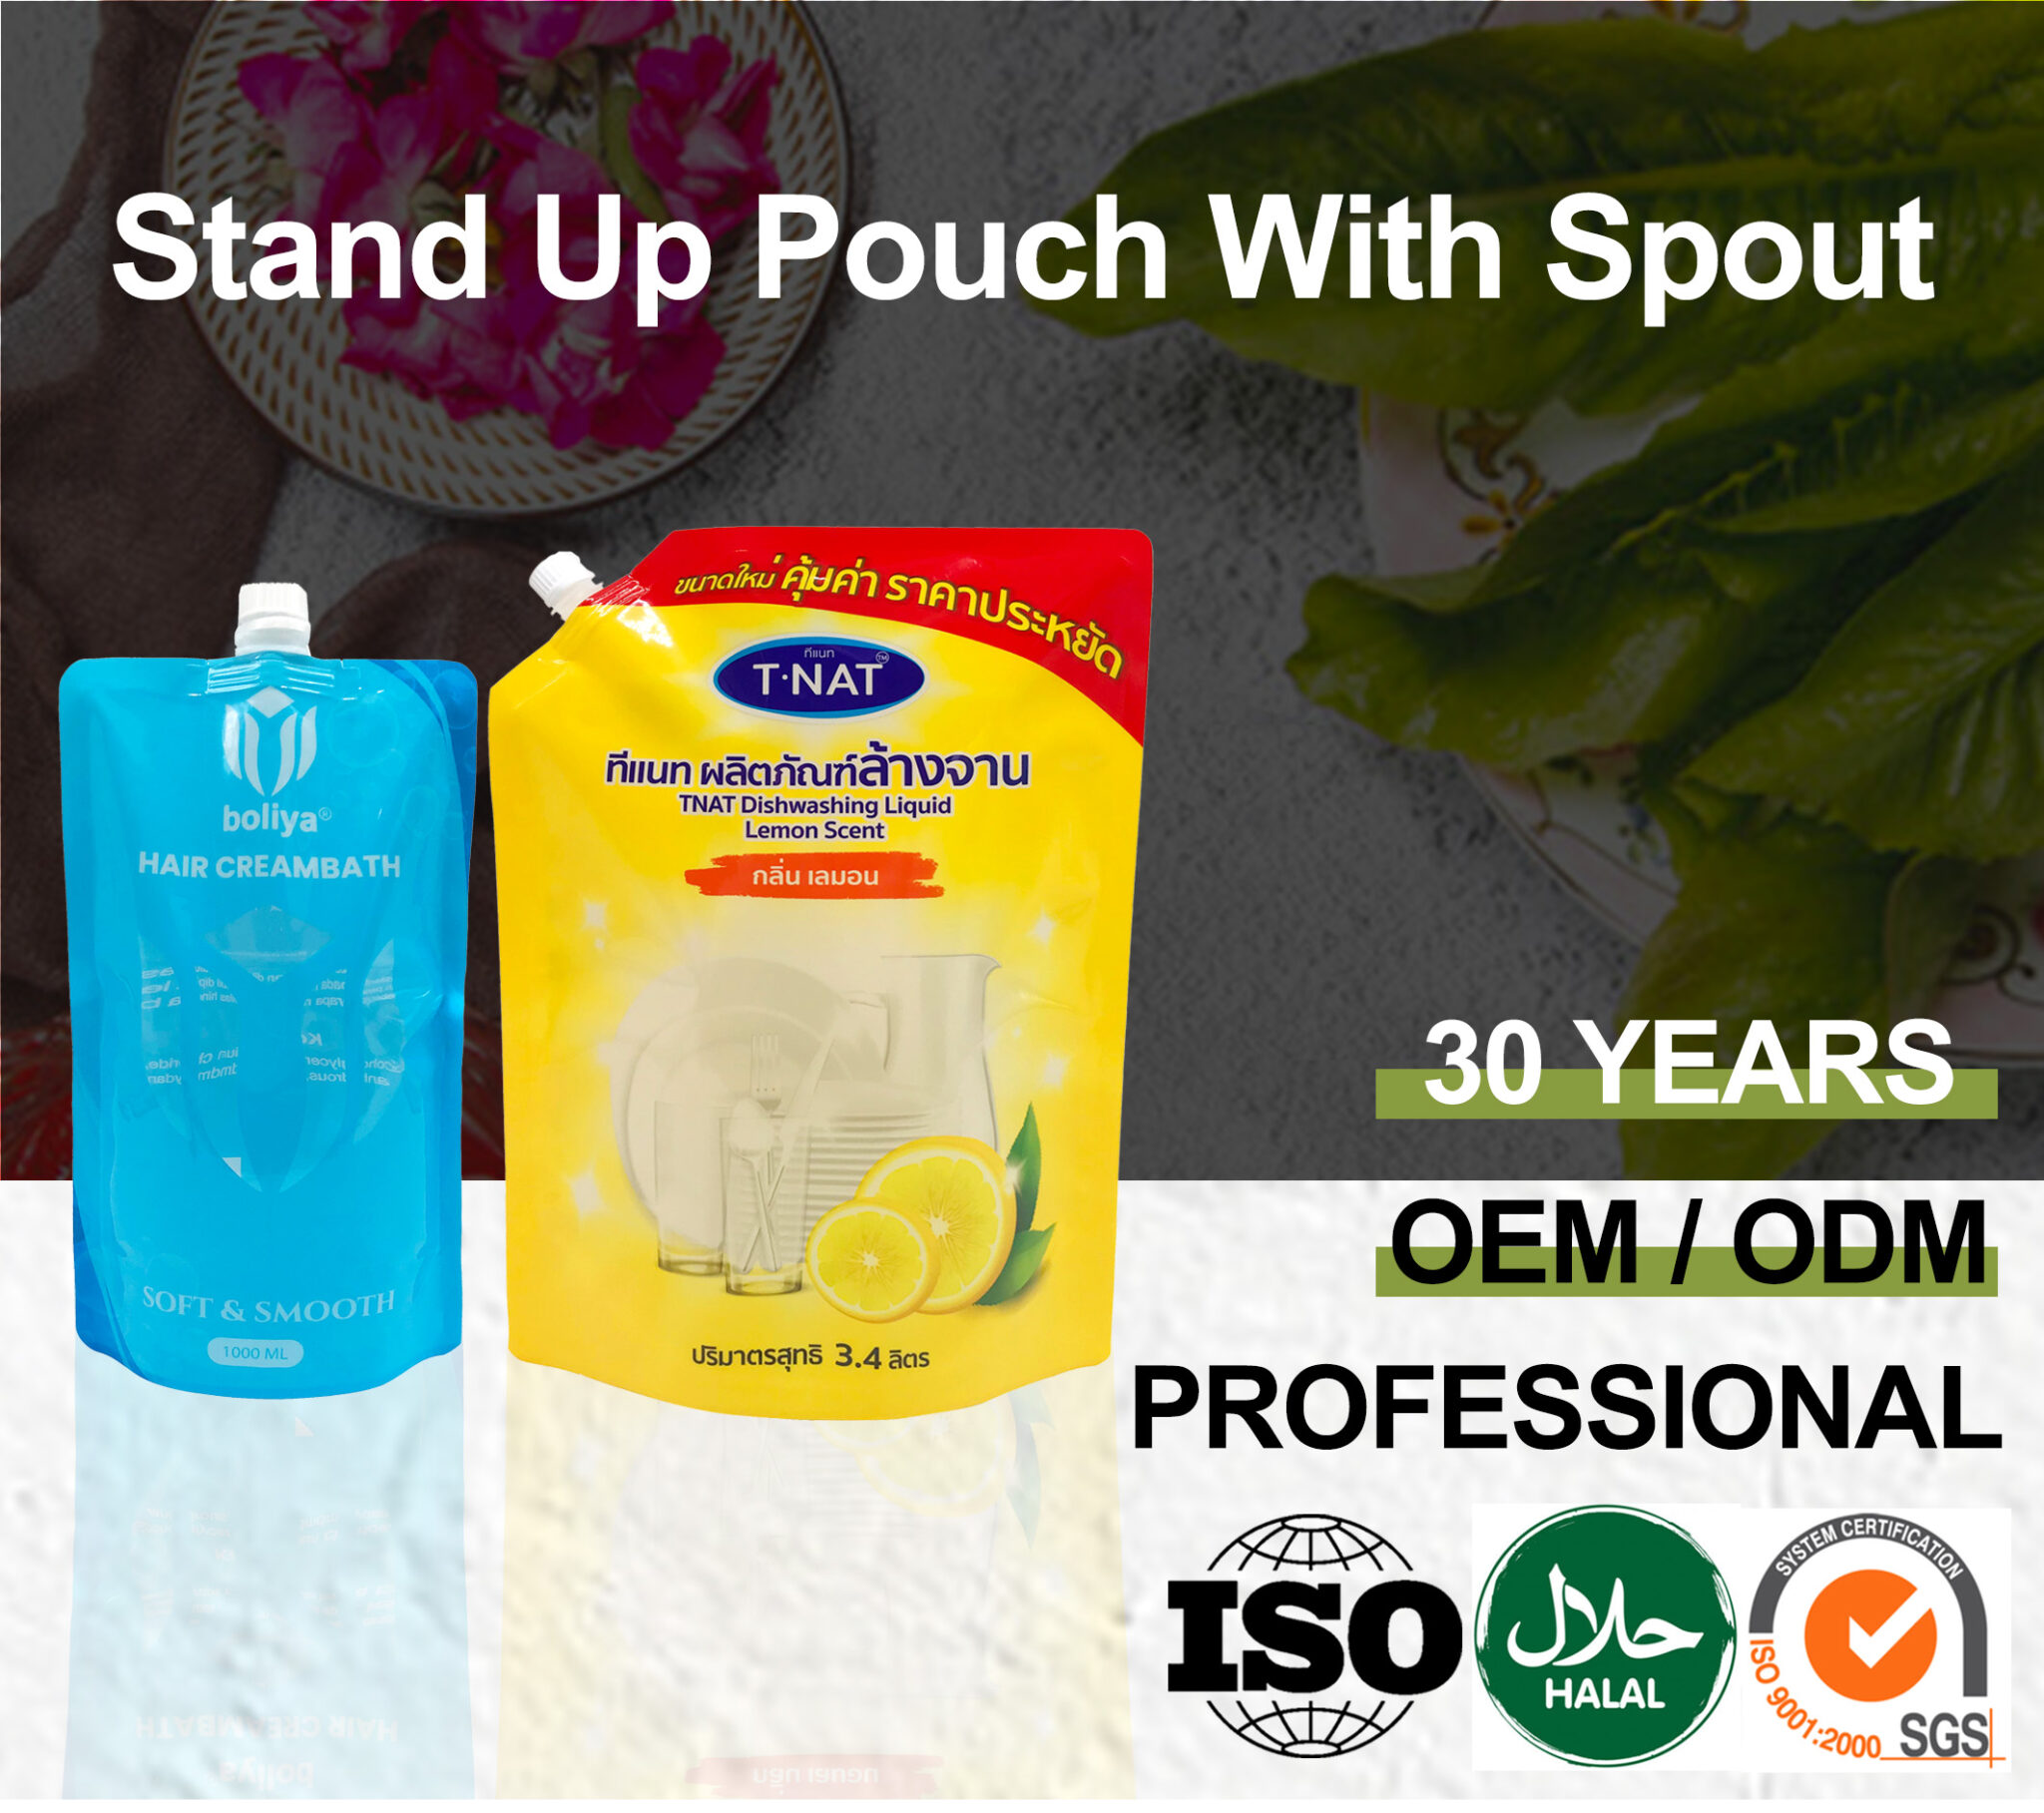 Spout Pouch scaled dishwashing liquid pouch